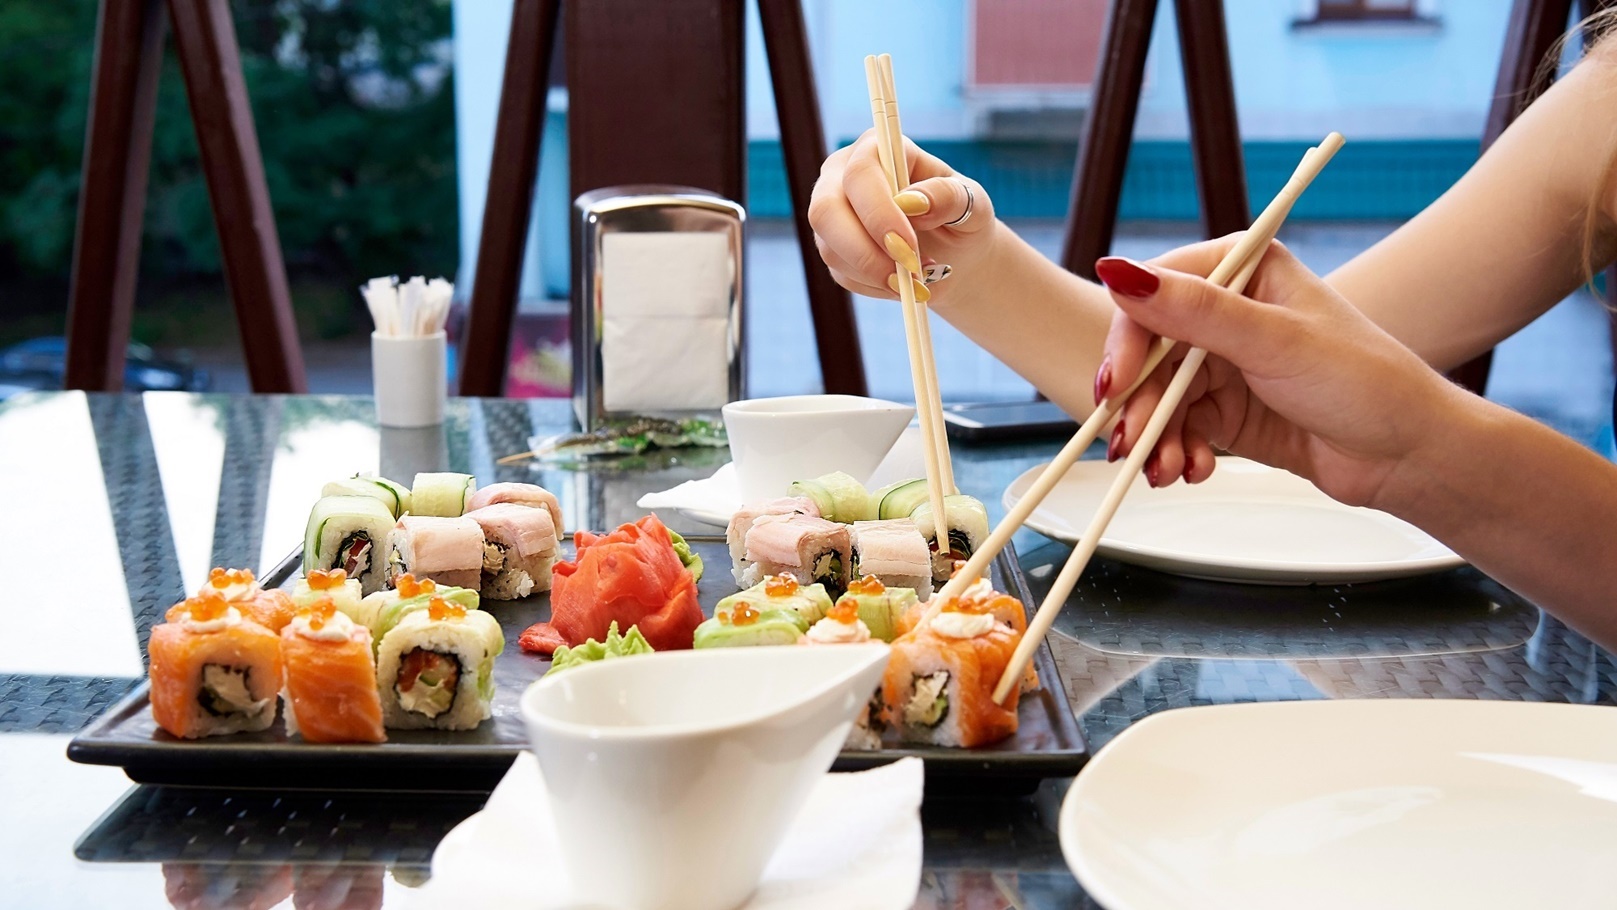 eating-sushi-in-the-restaurant-2022-02-07-09-06-46-utc